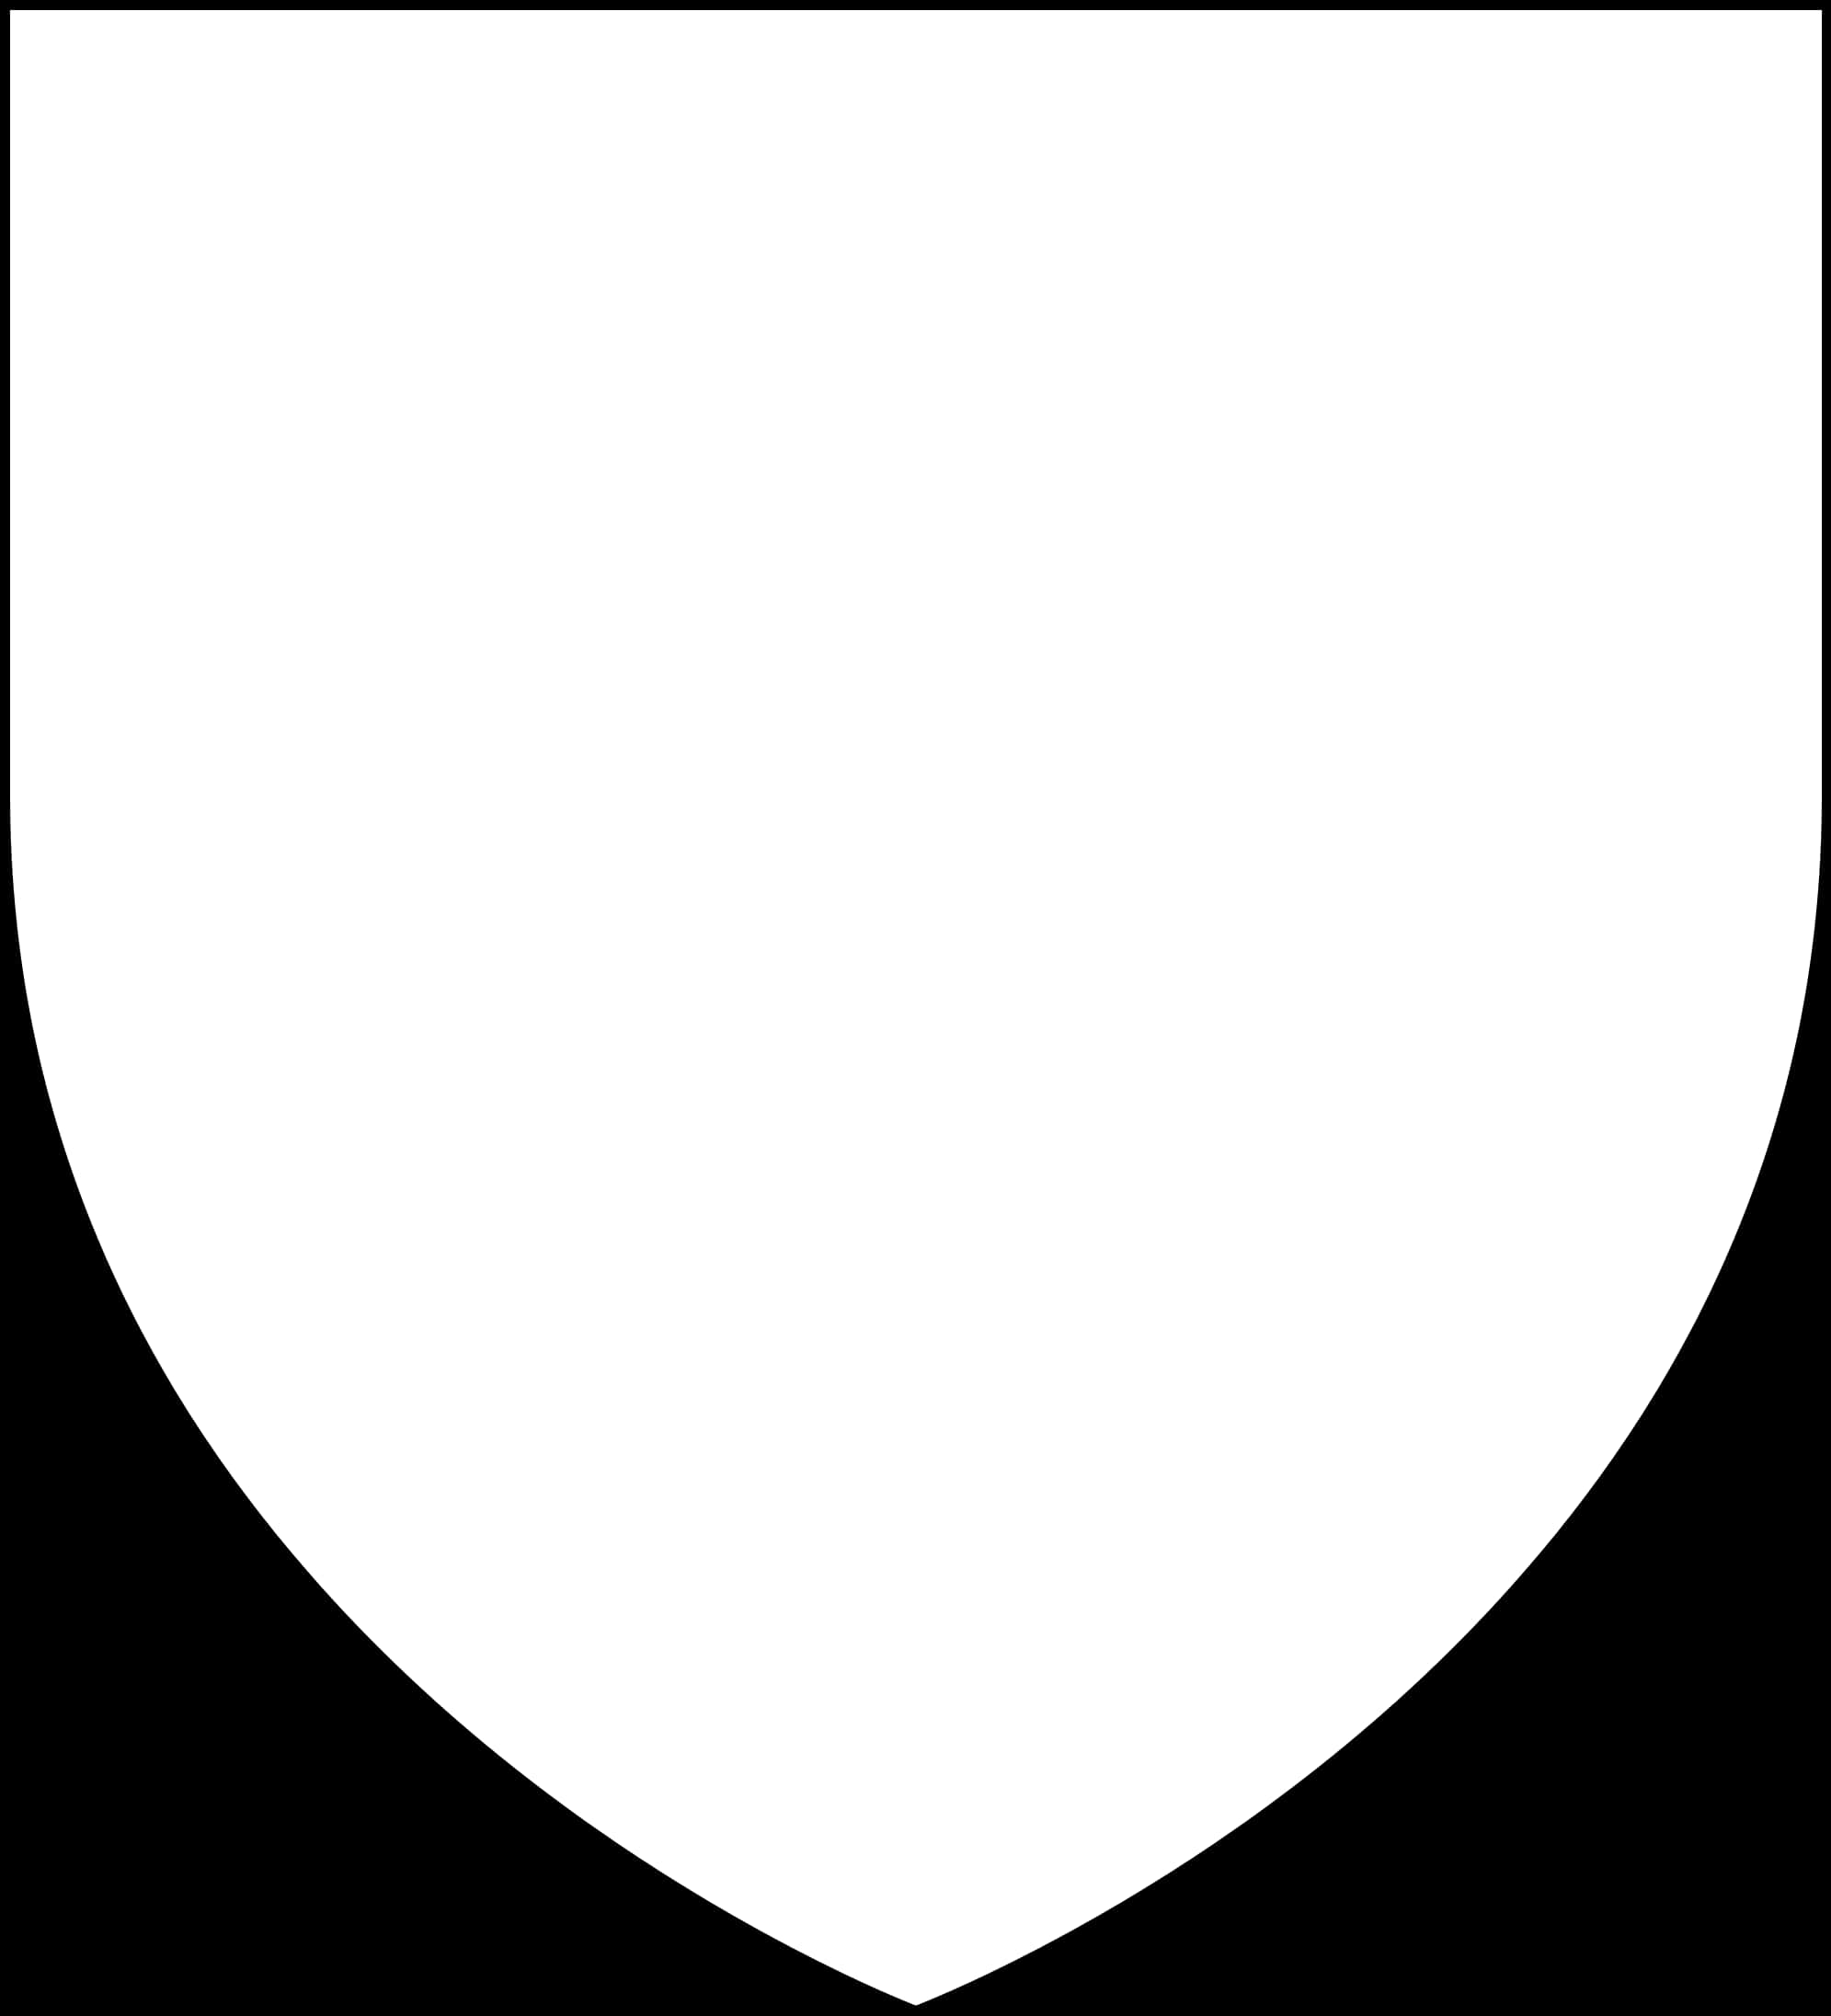 Blank Heraldic Shield Outline PNG